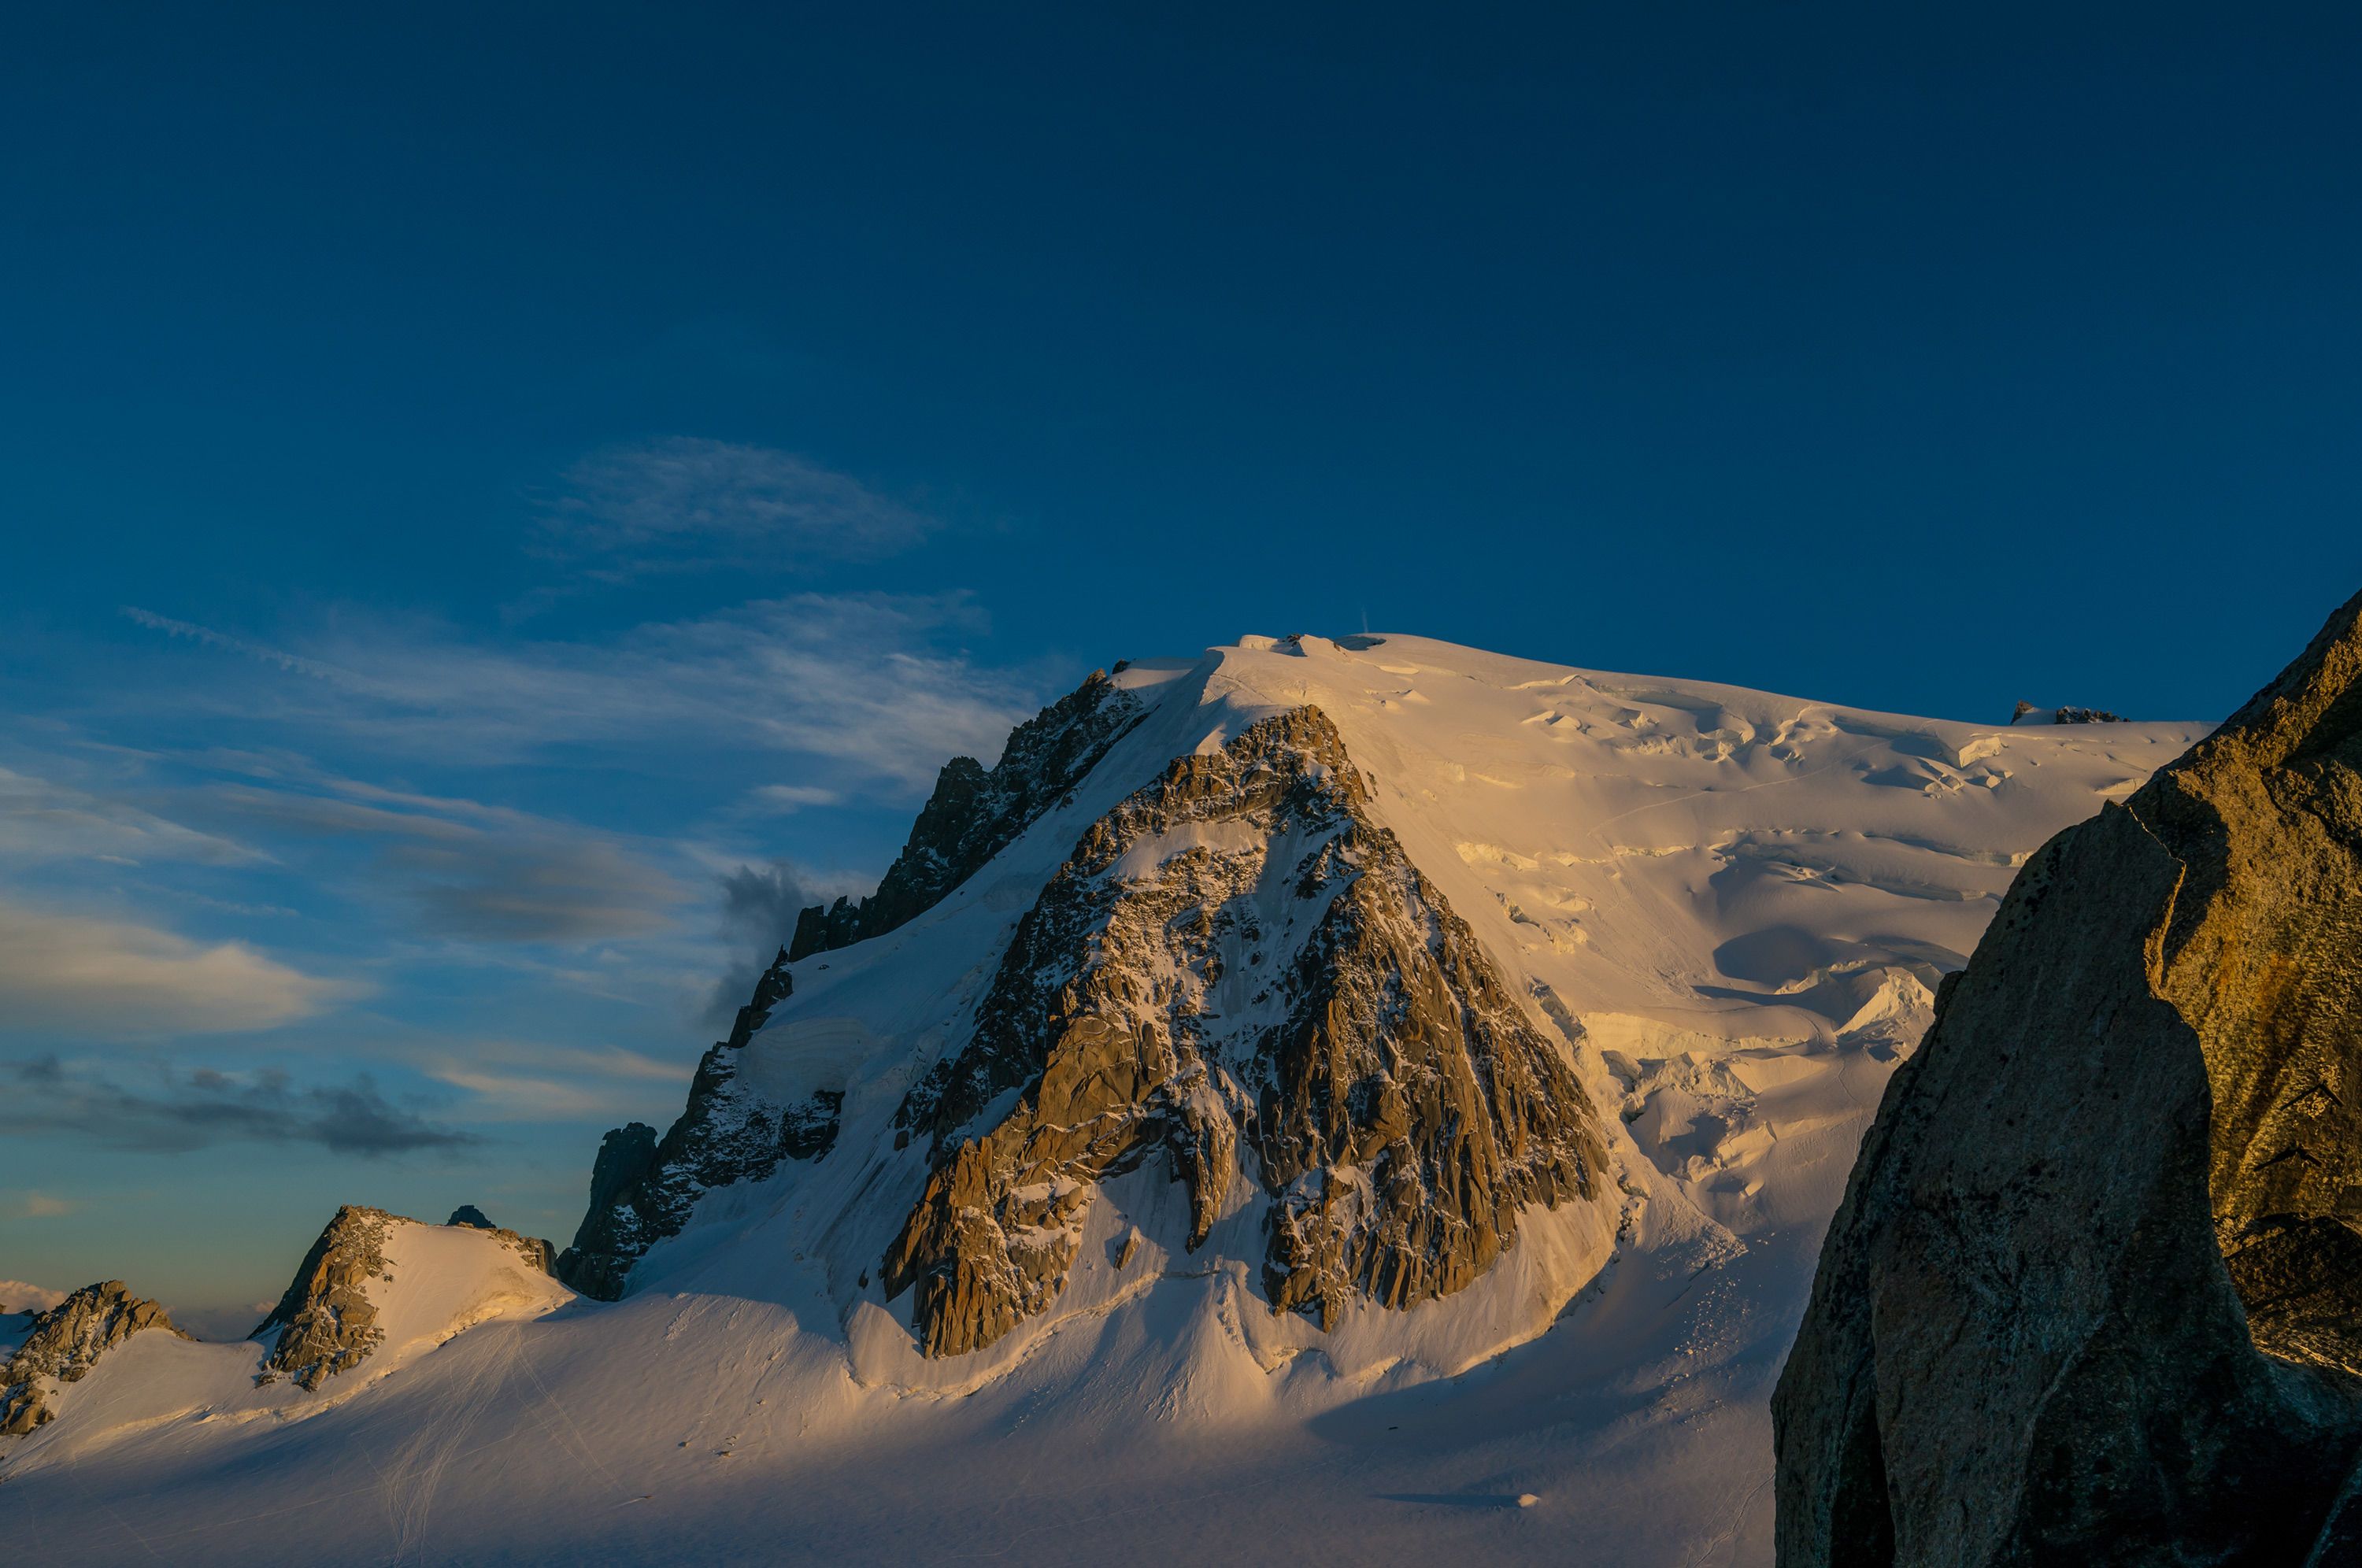 De Mont Blanc du Tacul, deze gletsjer wordt steiler en steiler